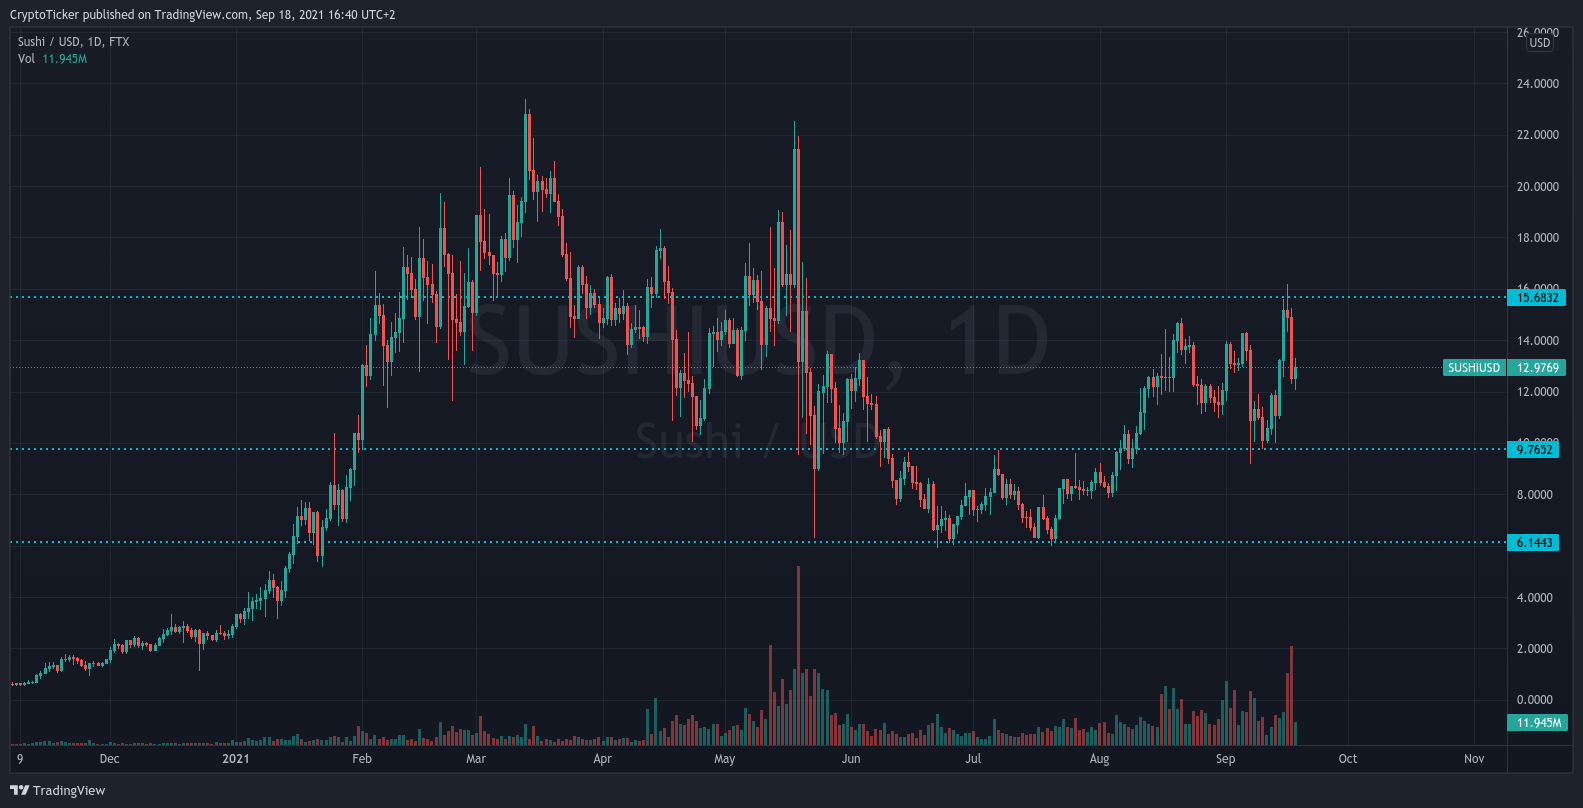 SUSHI/USD chart